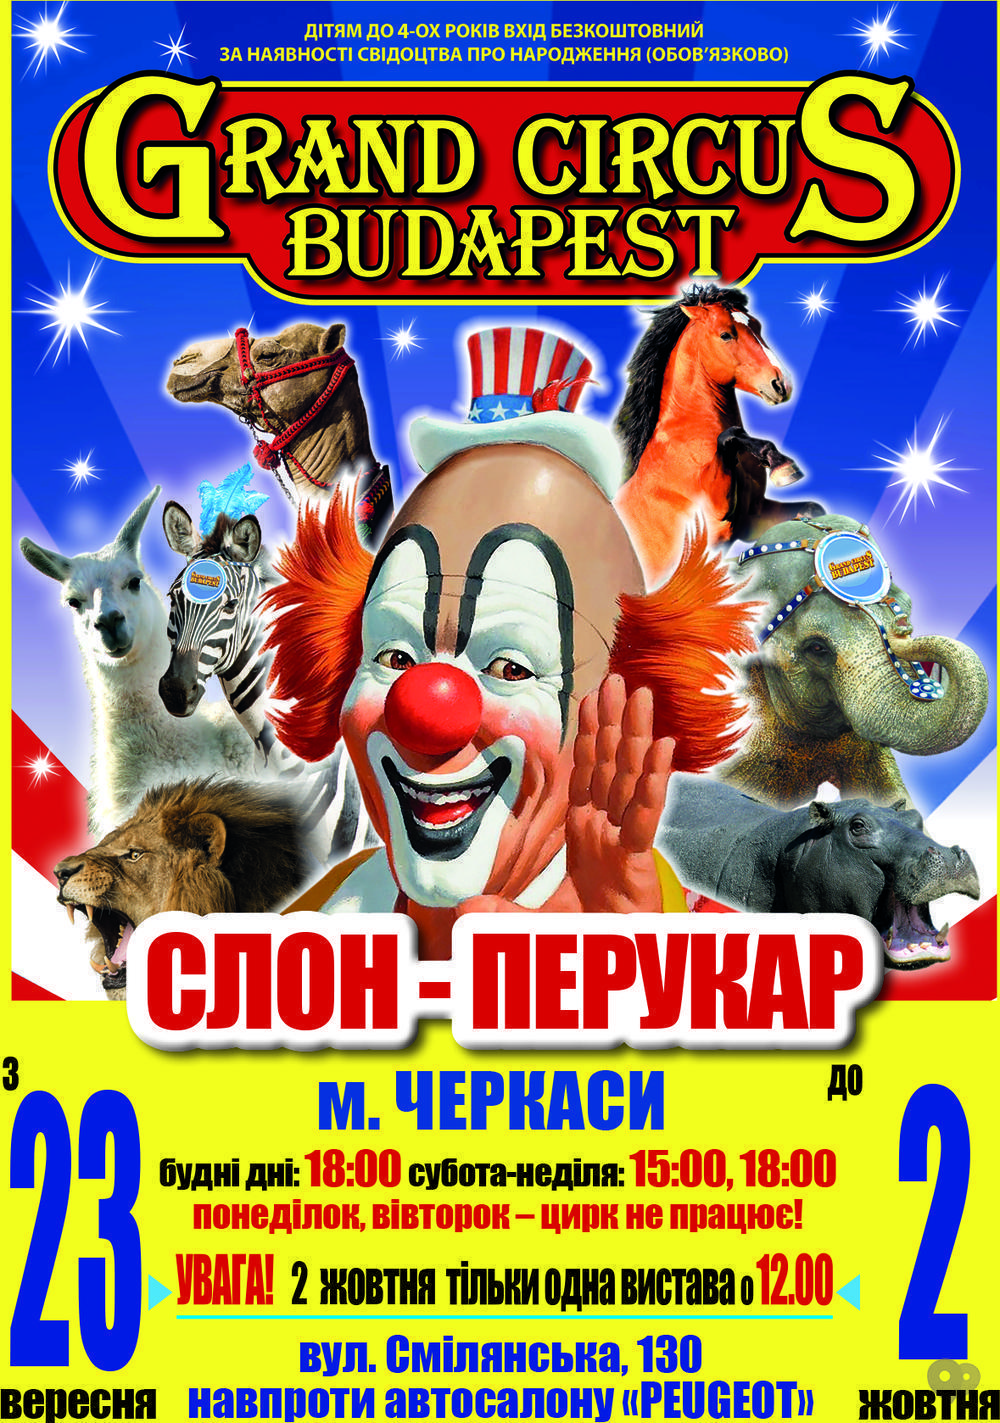 Кинотеатр будапешт билеты. Цирк Grand. Будапештский цирк афиша. Цирк Будапешт афиша. Большой цирк в Будапеште.